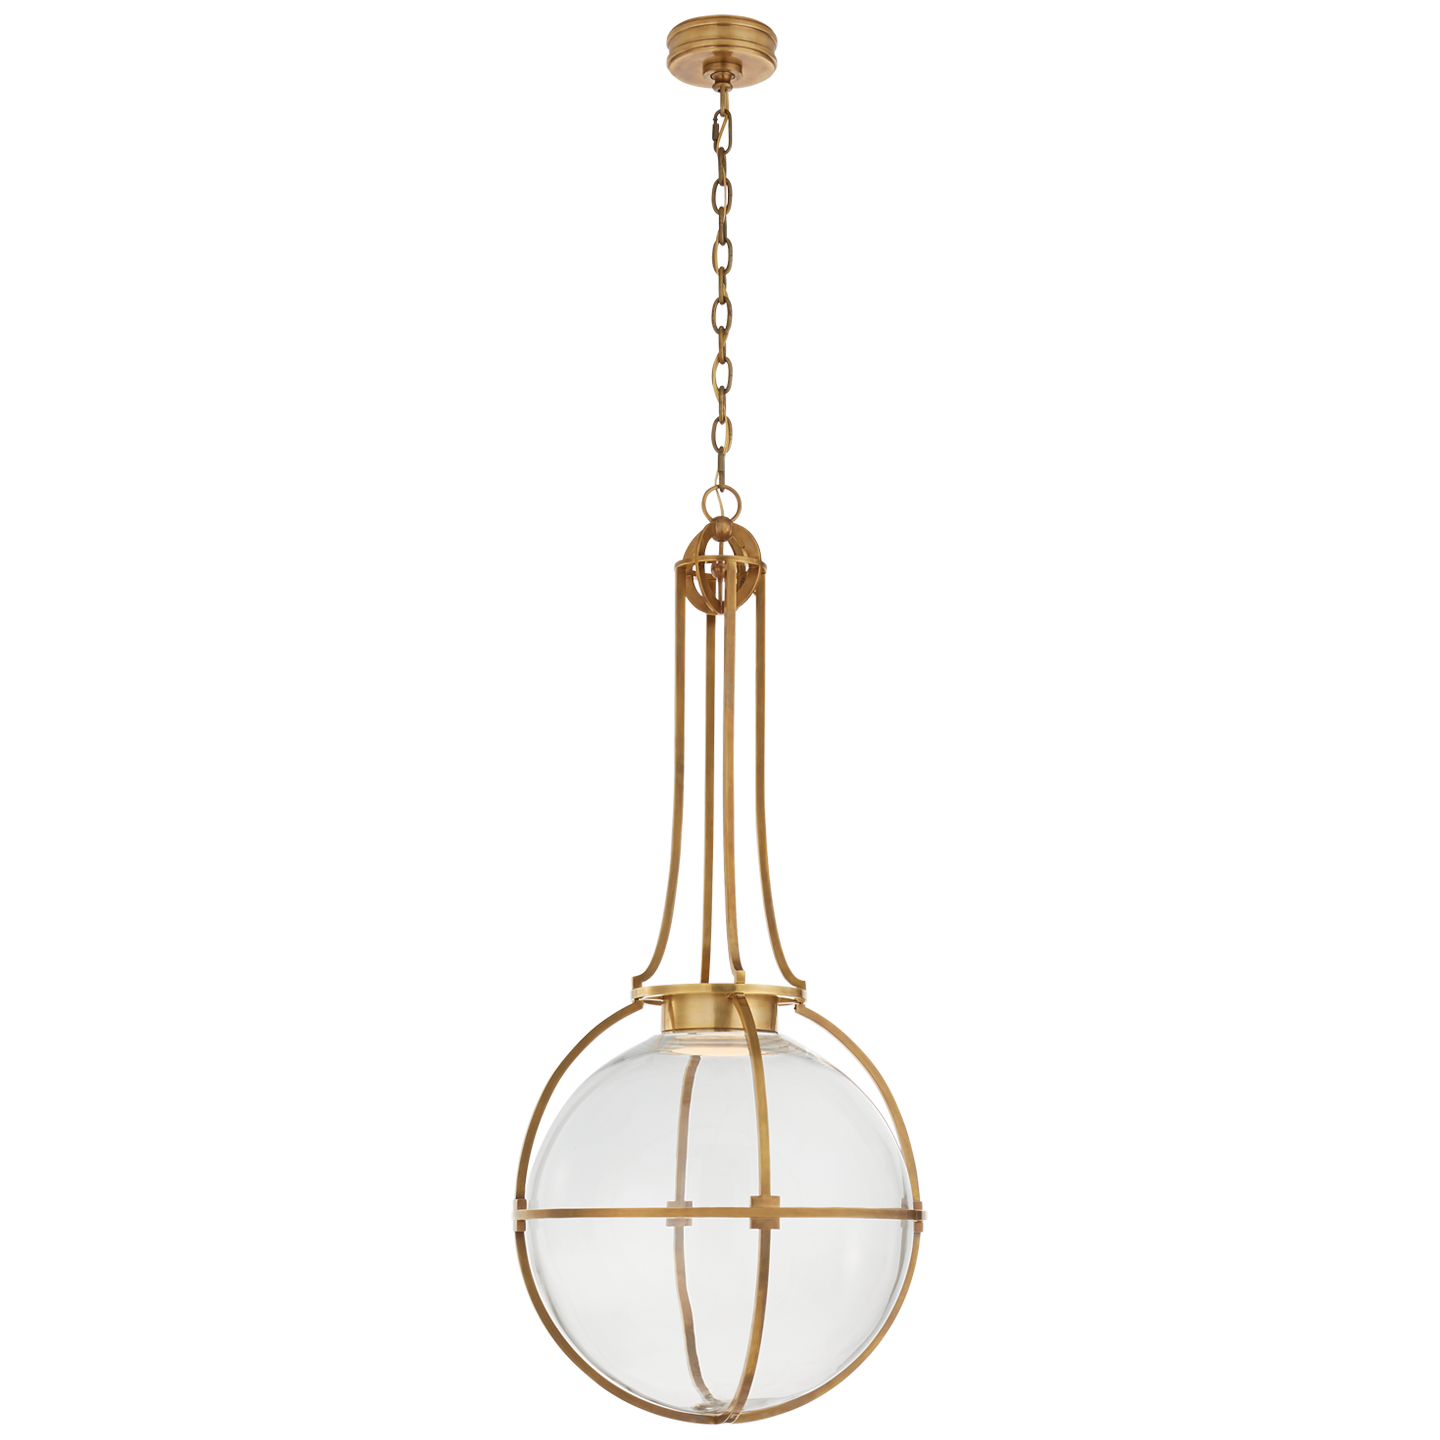 Lataa kuva Galleria-katseluun, Gracie Large Captured Globe Pendant in Antique-Burnished Brass with Clear Glass
